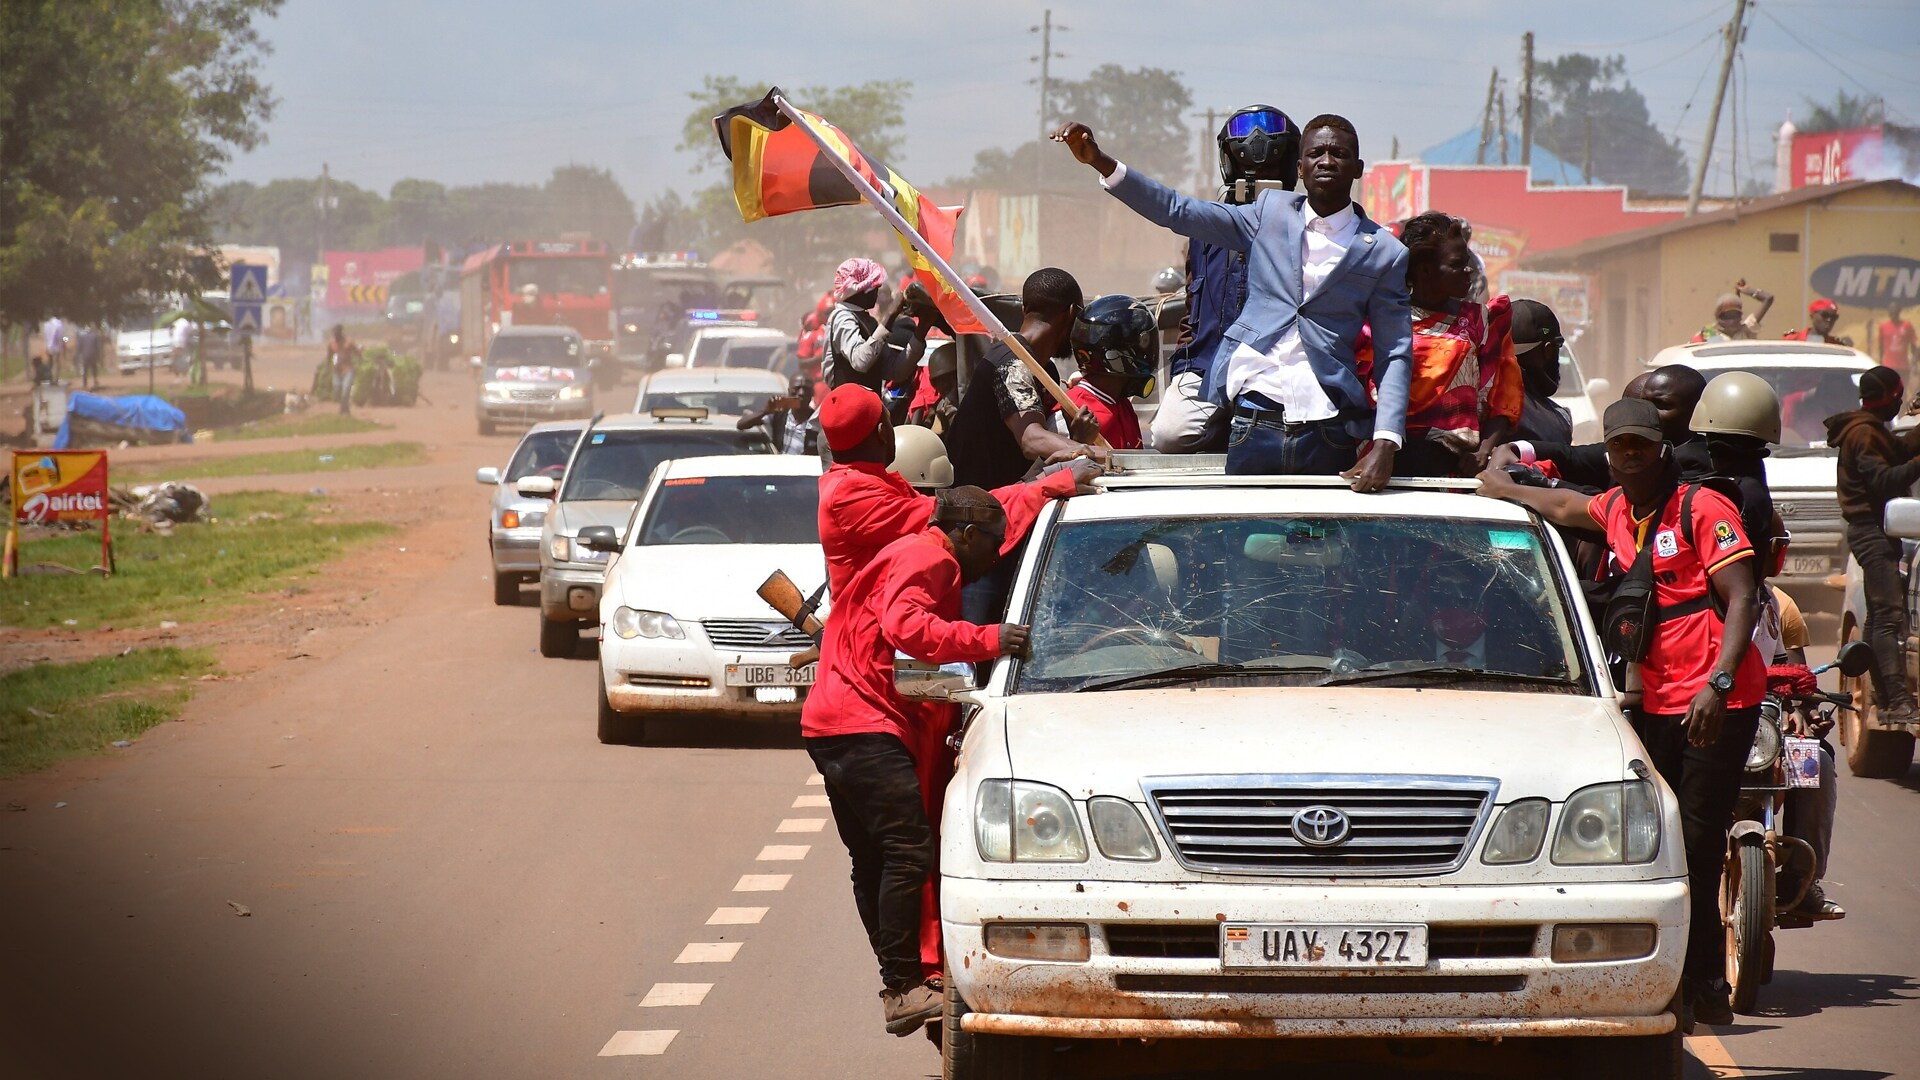 Bobi Wine: The People's President - Film Site (Docs Homepage)